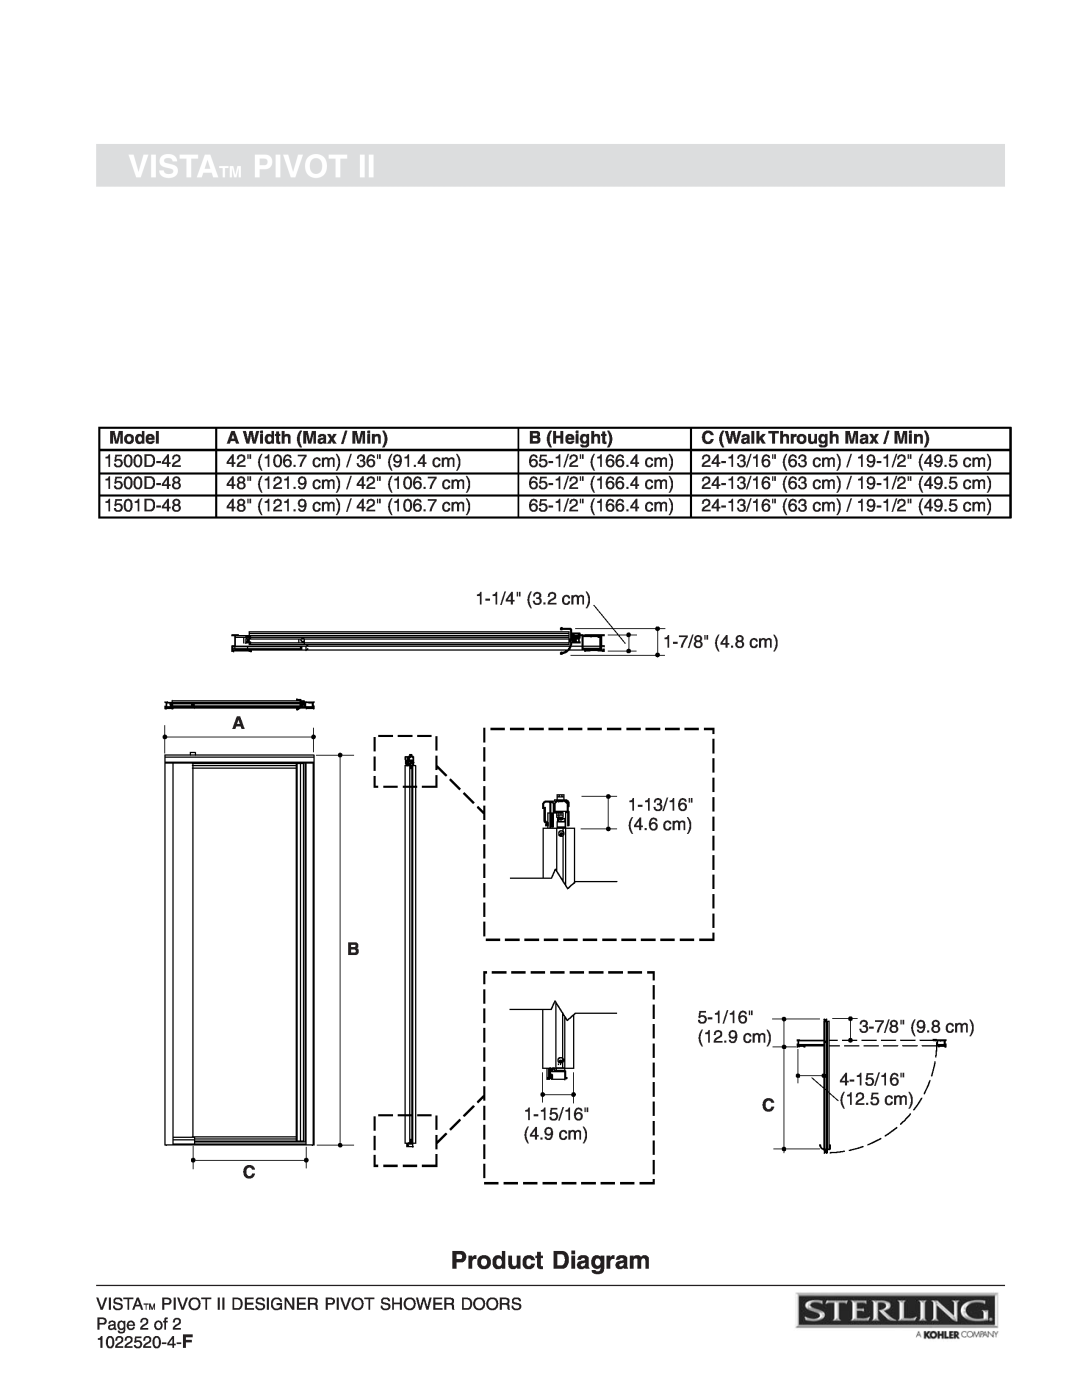 Sterling Plumbing 1501D Product Diagram, Vistatm Pivot, Model, A Width Max / Min, B Height, C Walk Through Max / Min 